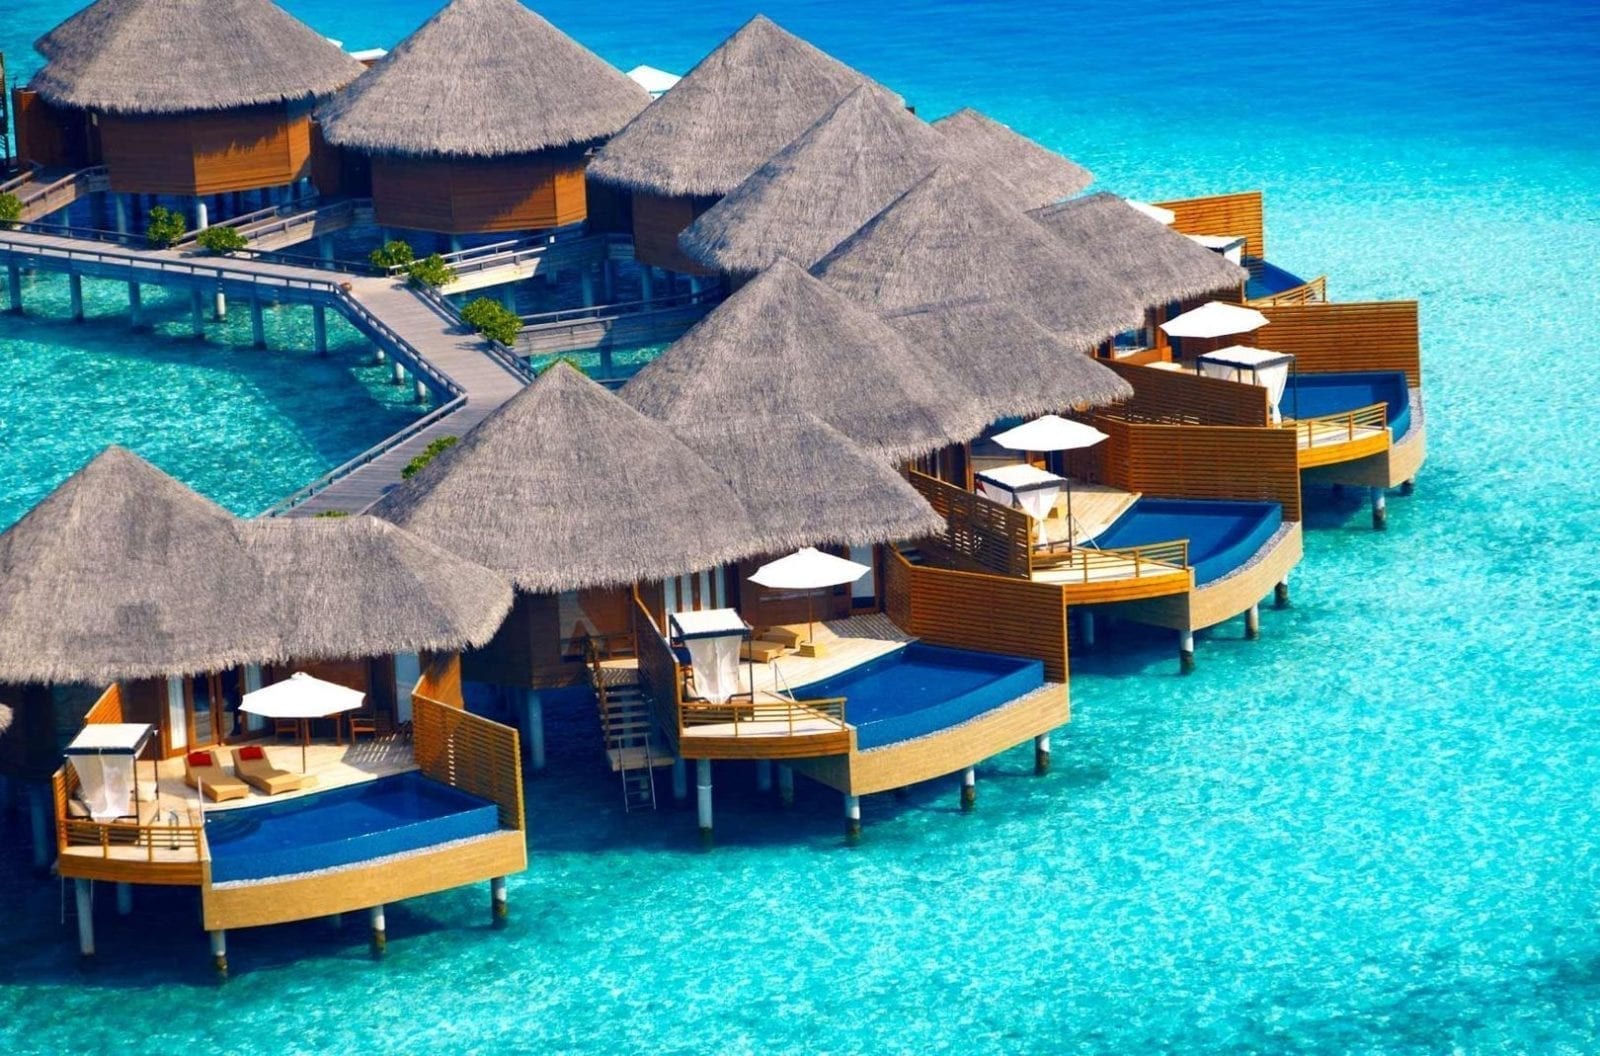 Baros Hotel Maldives Jetset Christina Top Private Island Resorts